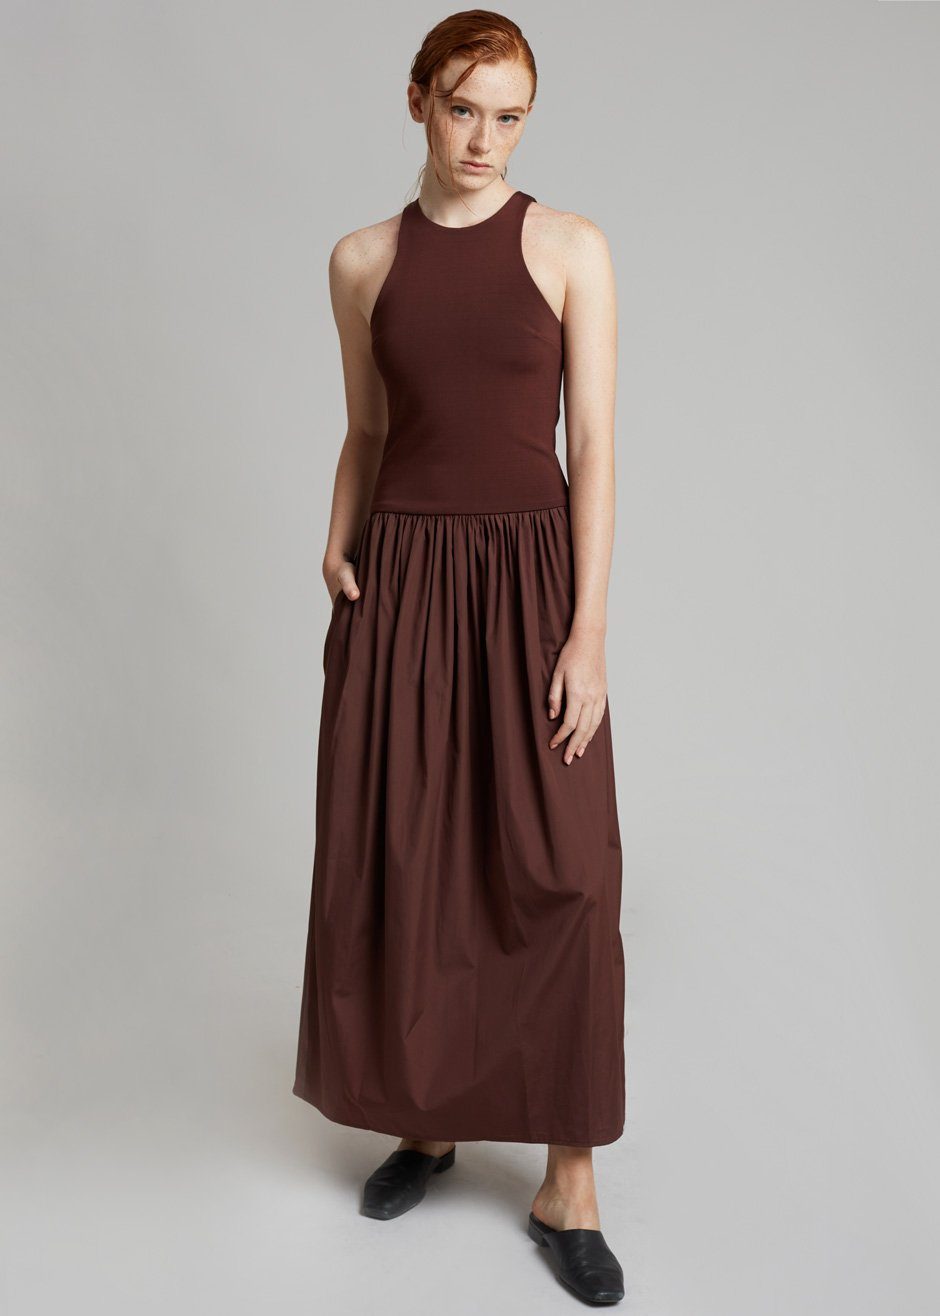 Esse Studios Knit Cotton Tank Dress - Chocolate - 1